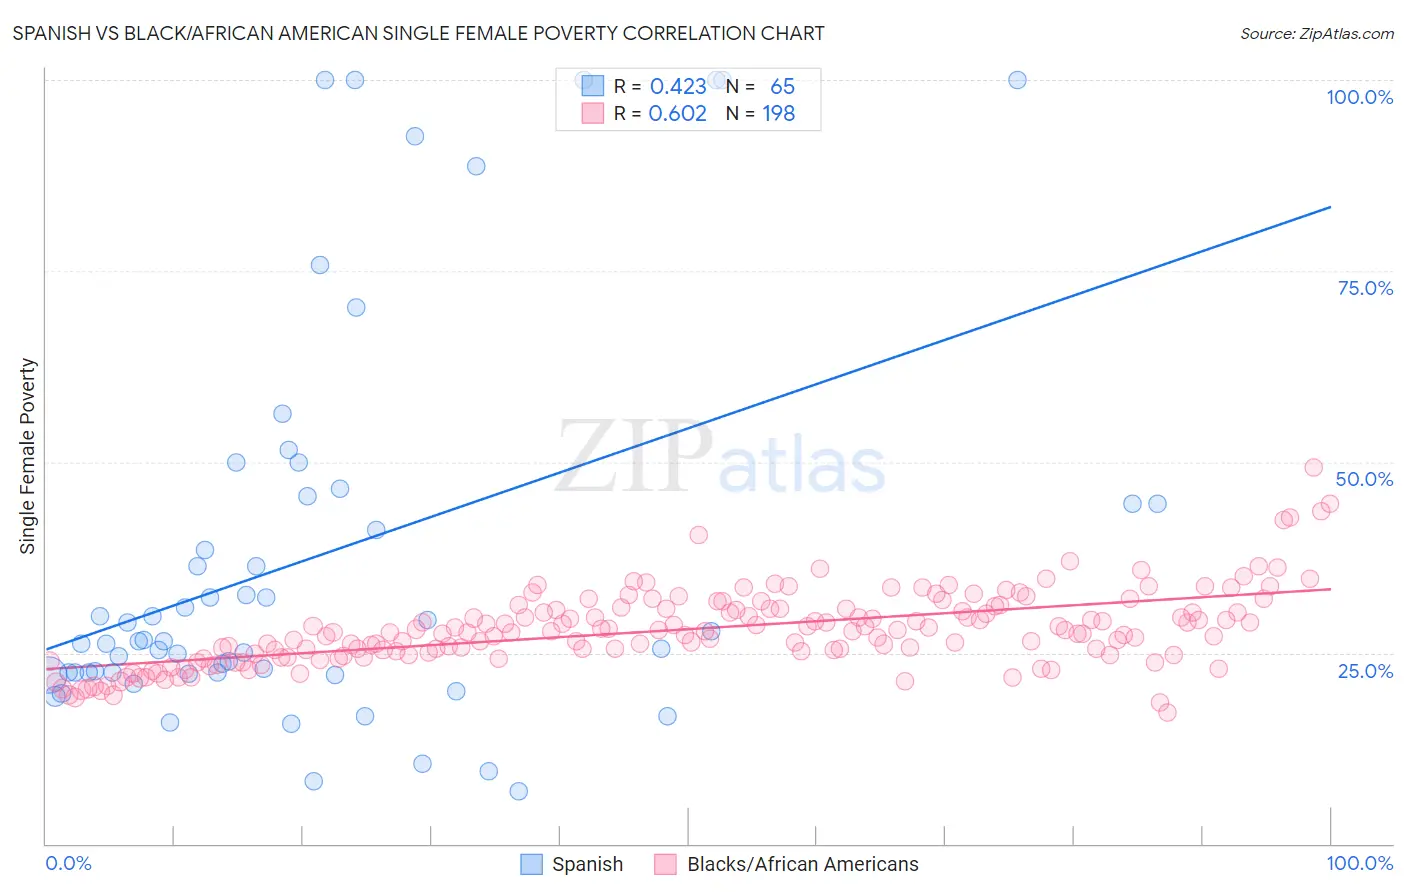 Spanish vs Black/African American Single Female Poverty